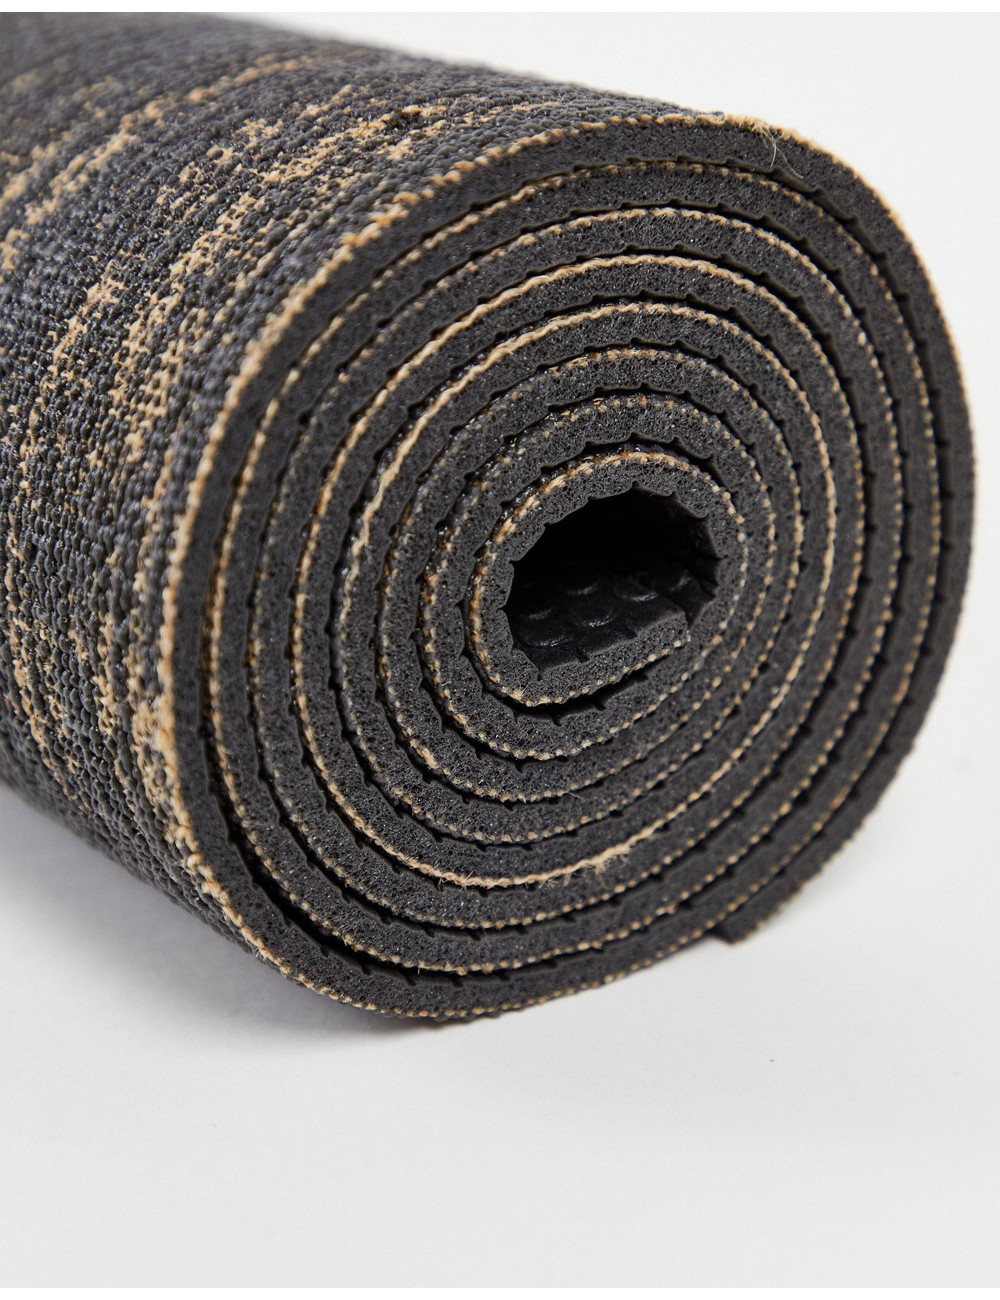 HIIT flax yoga mat in black